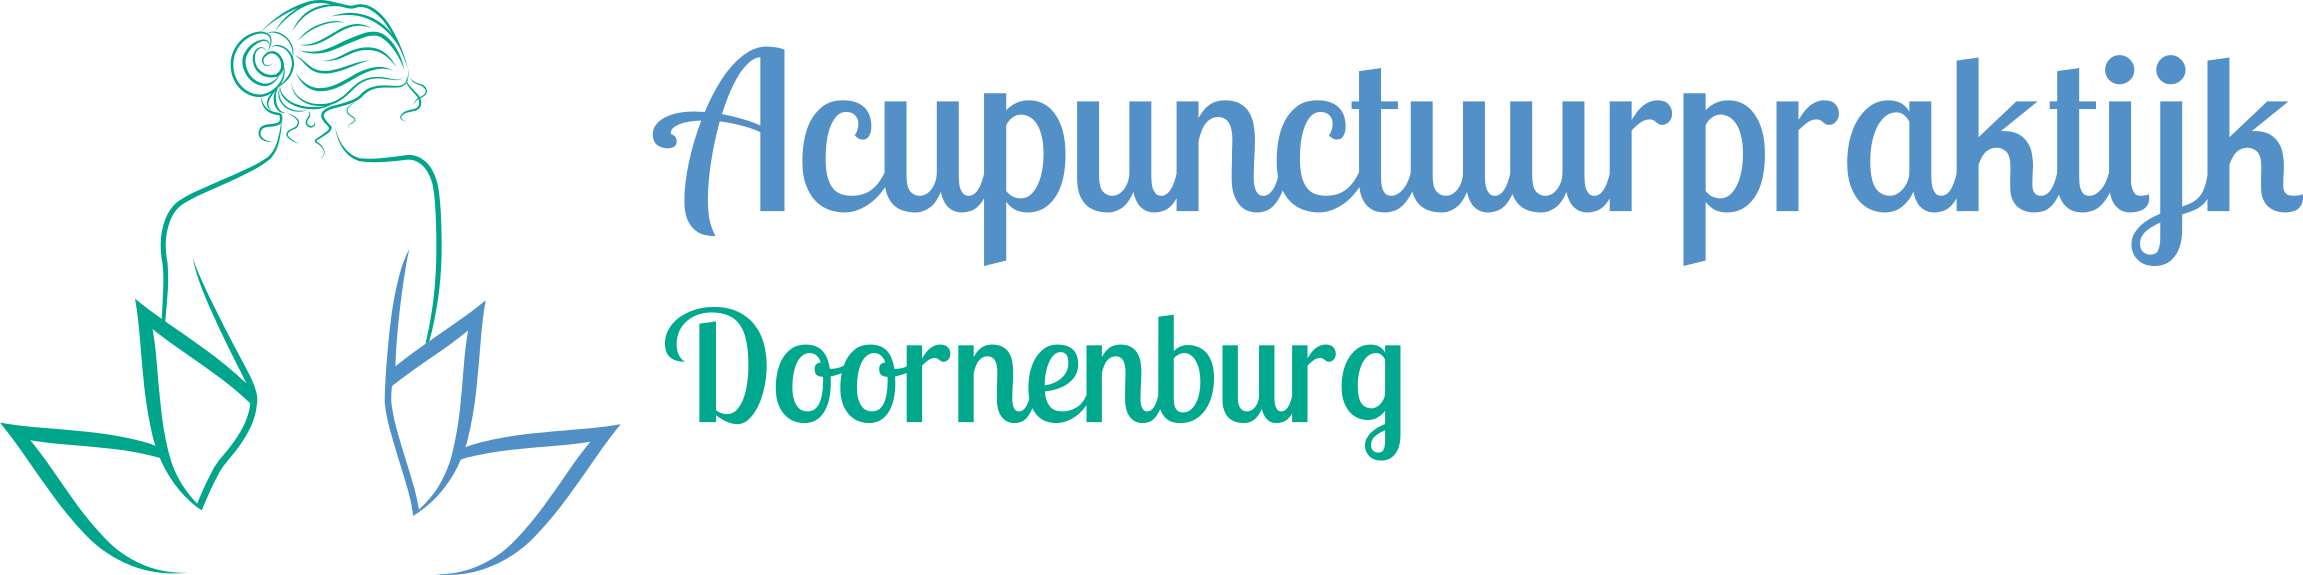 Acupunctuurpraktijk Doornenburg